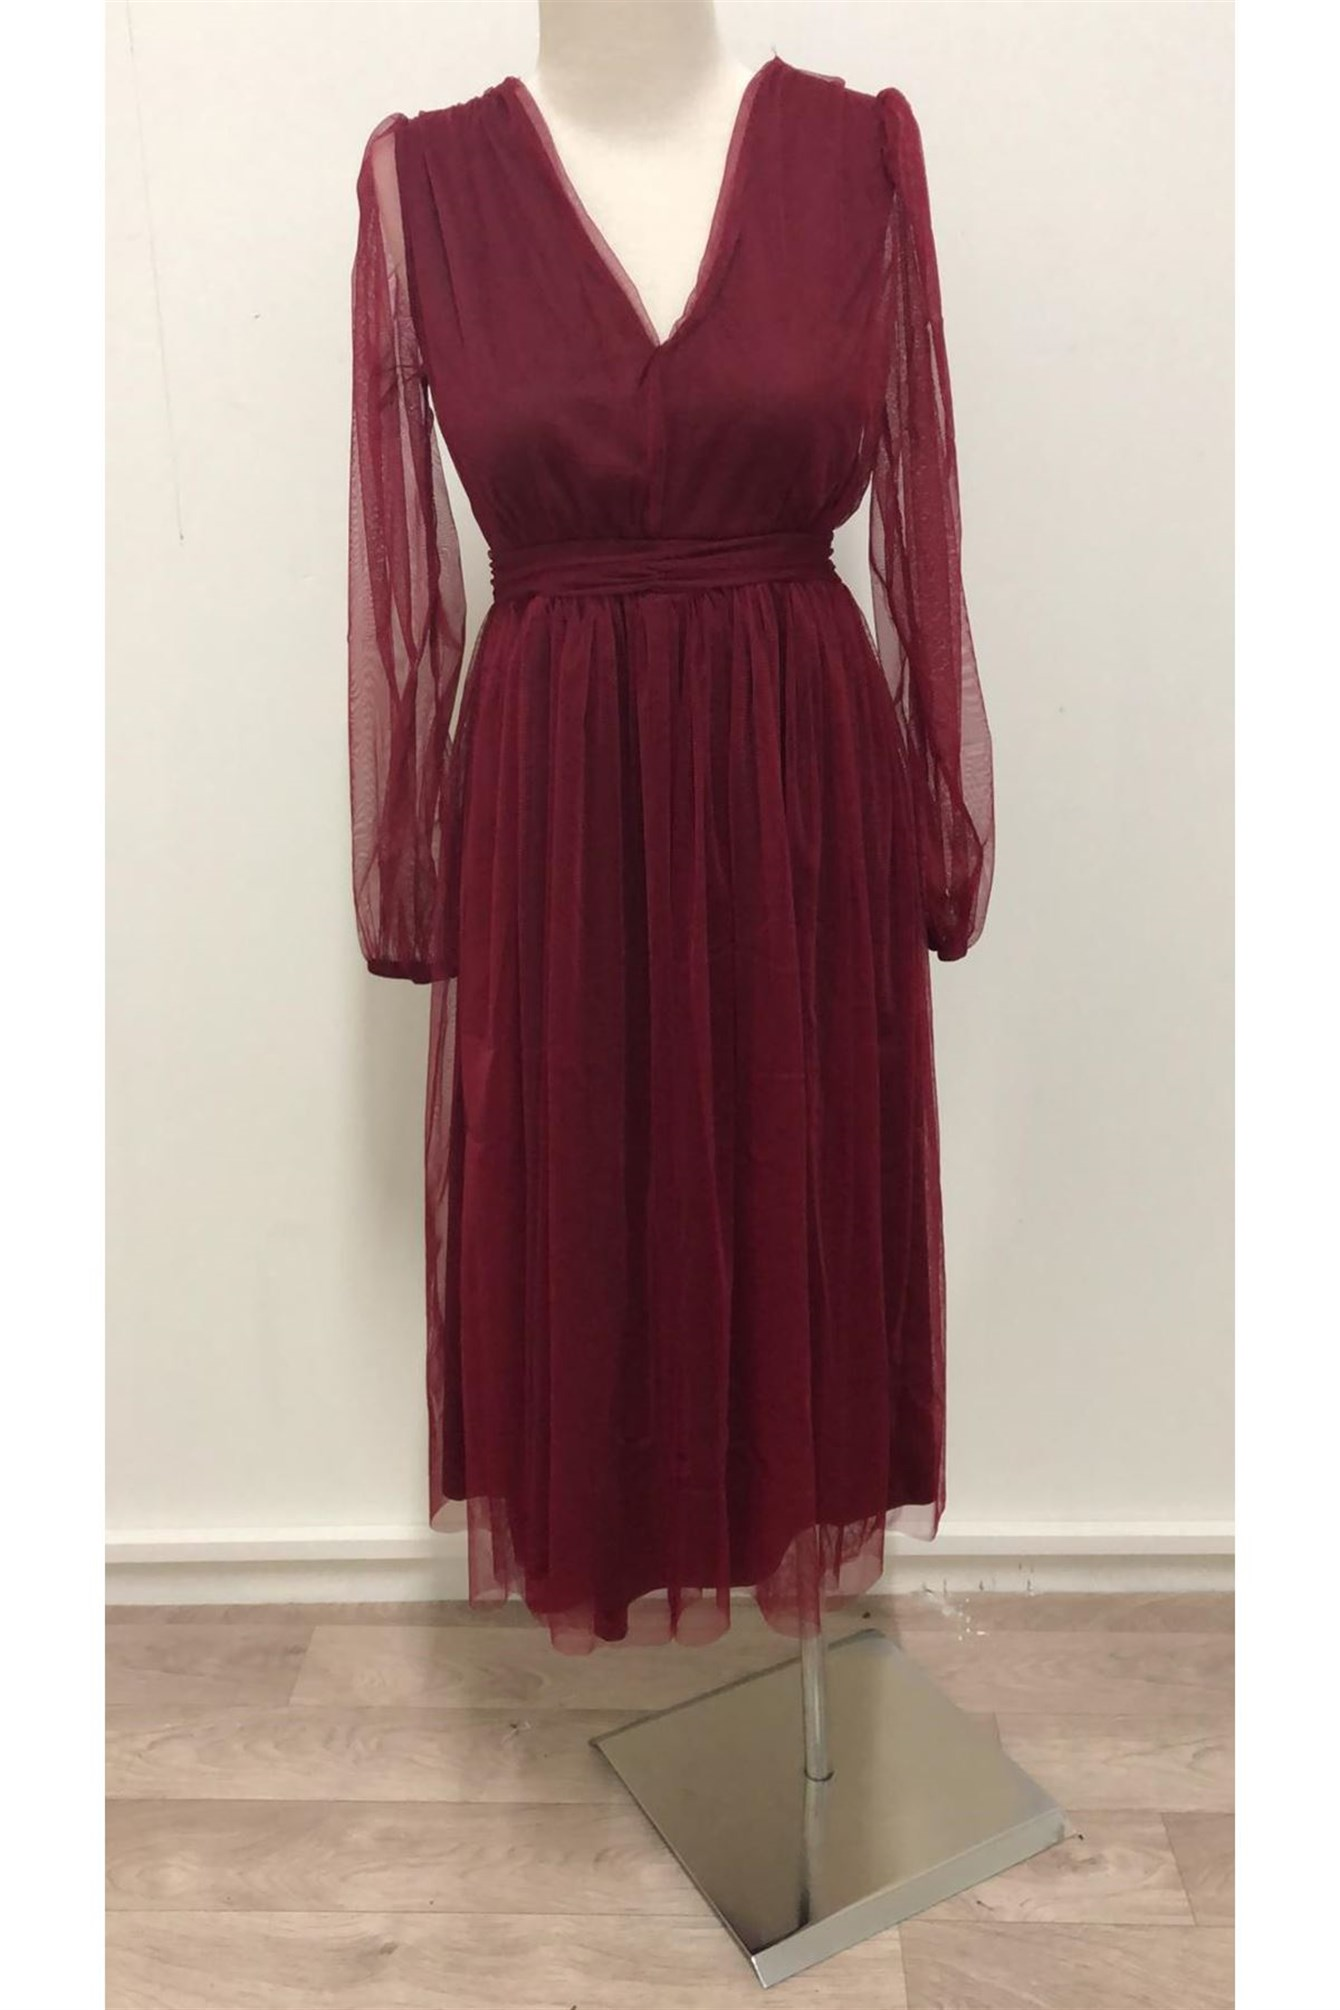 Charming Puffy Long Sleeve Burgundy Tea Length Long Prom Dress/Evening Gown T1641